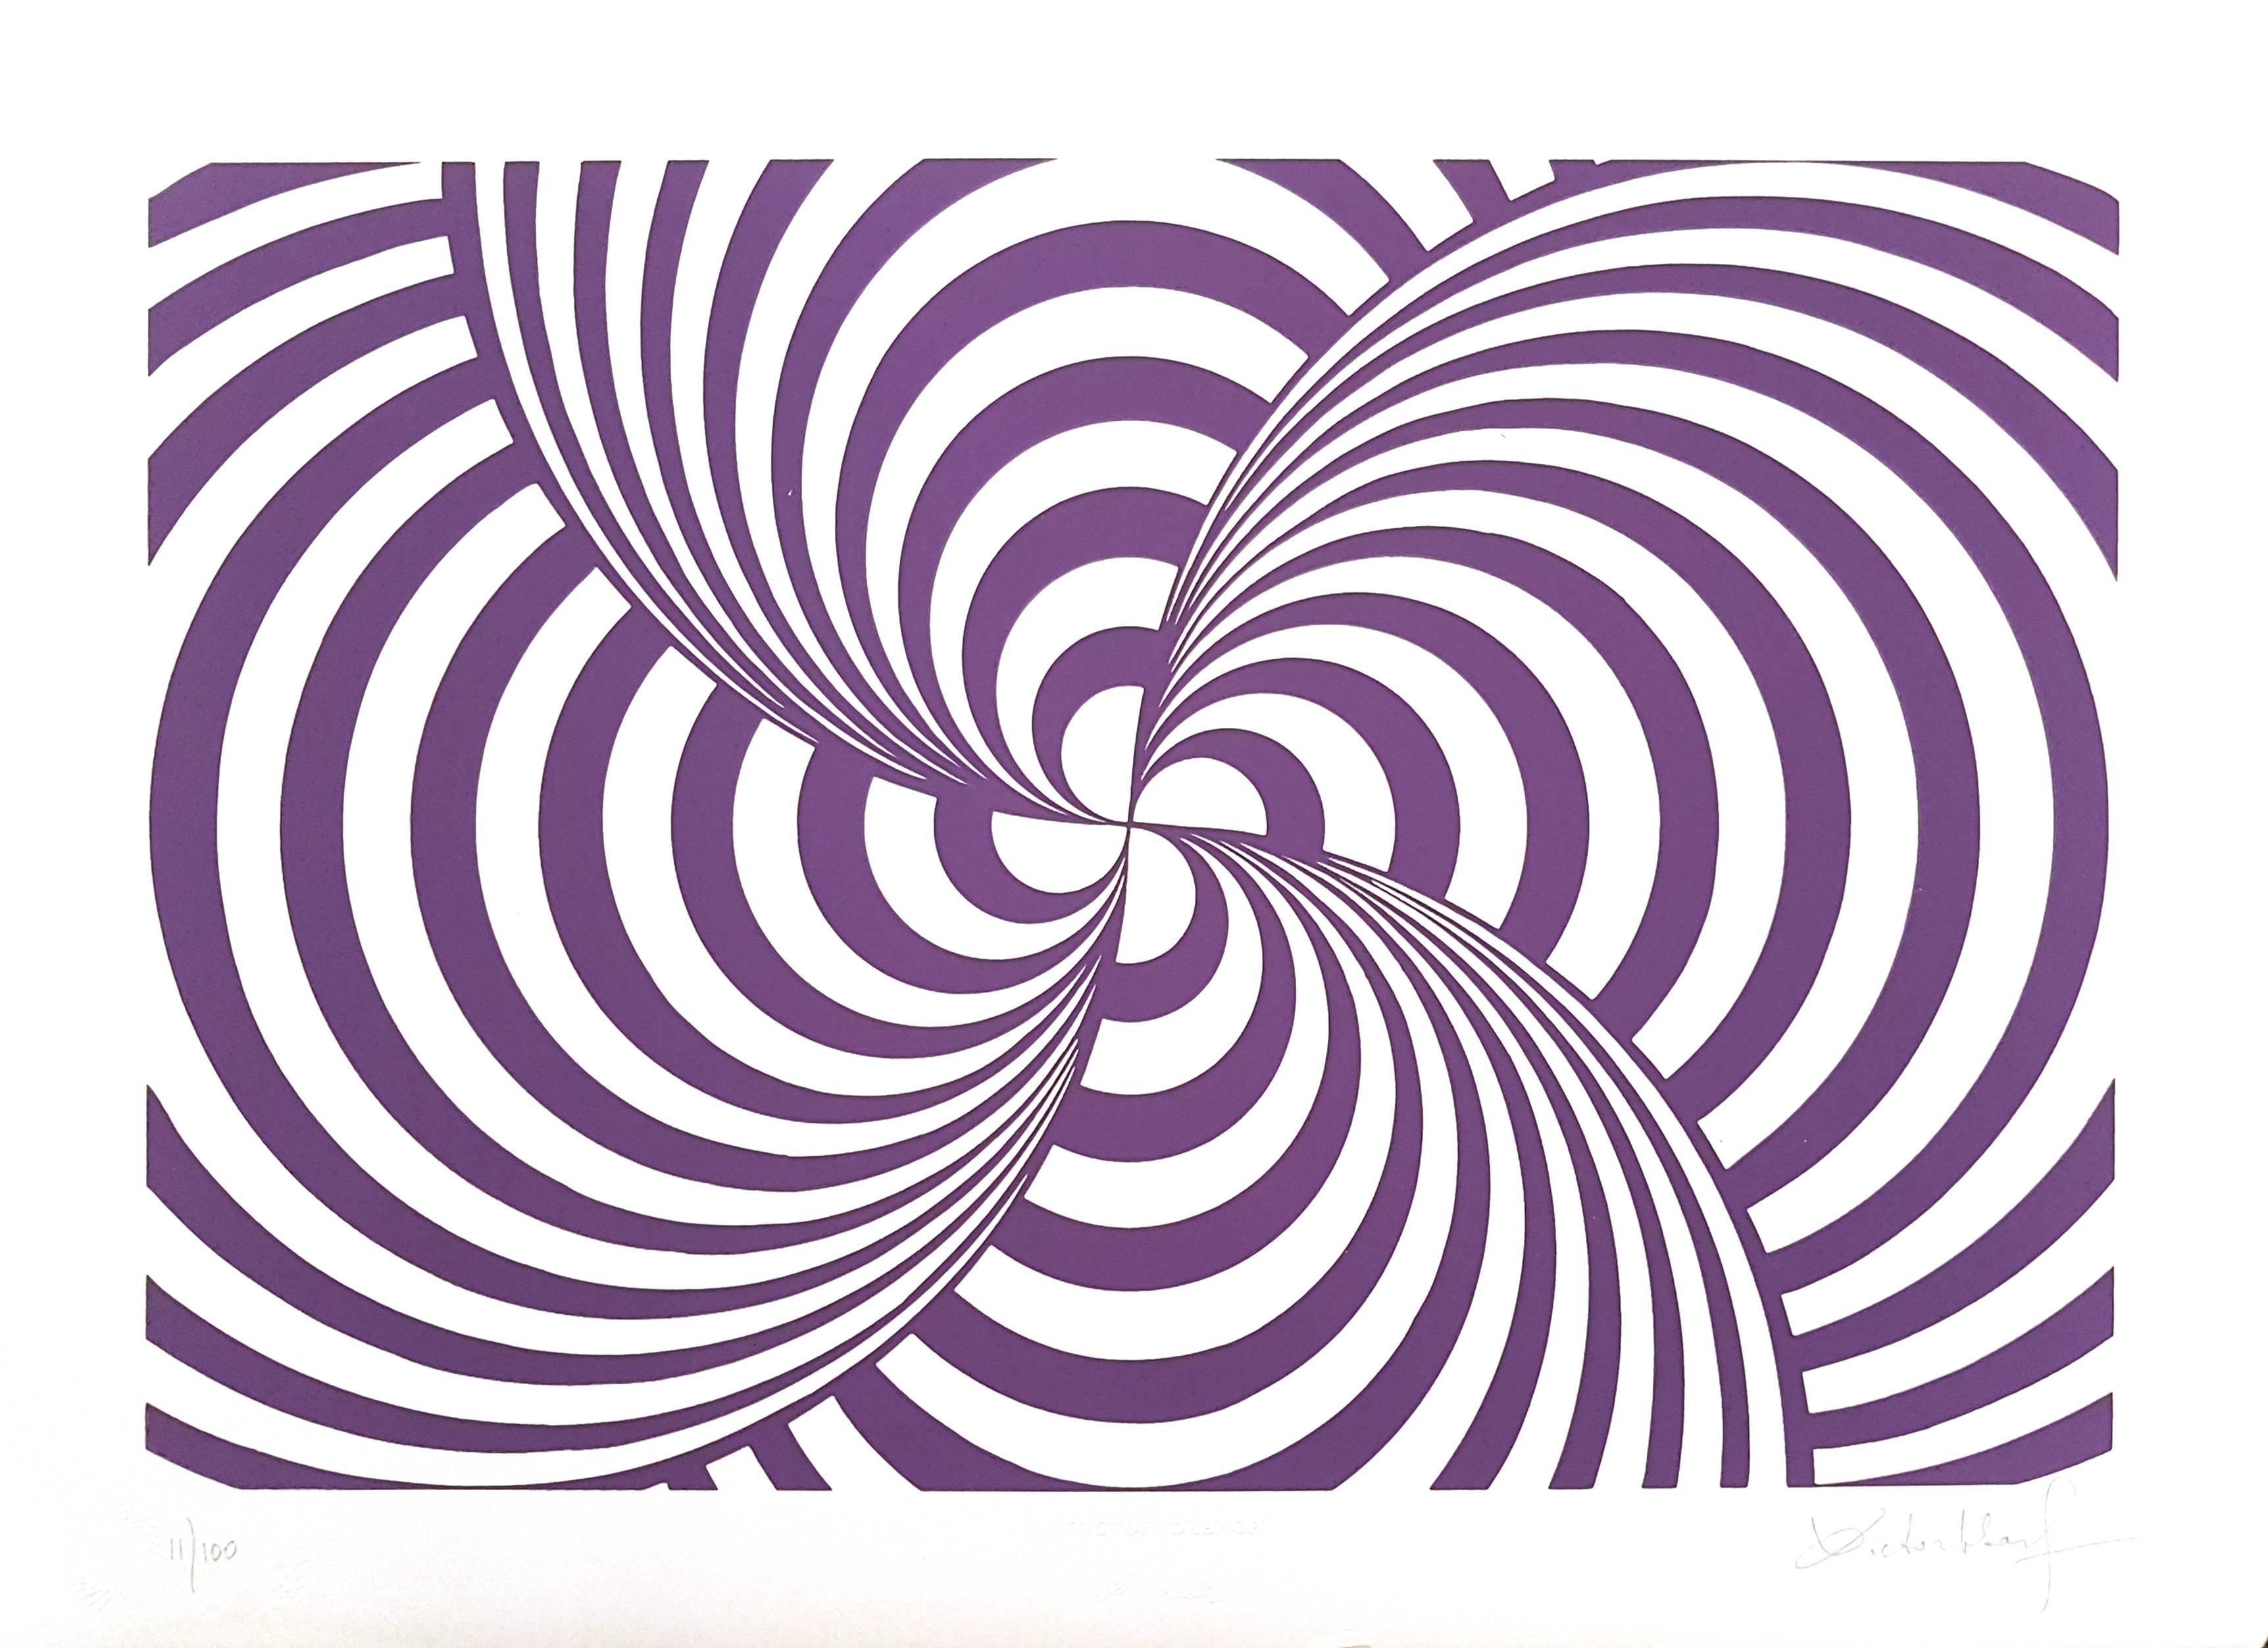 Victor Debach Abstract Print - Purple Composition - Original Screen Prints by V. Debach - 1970s